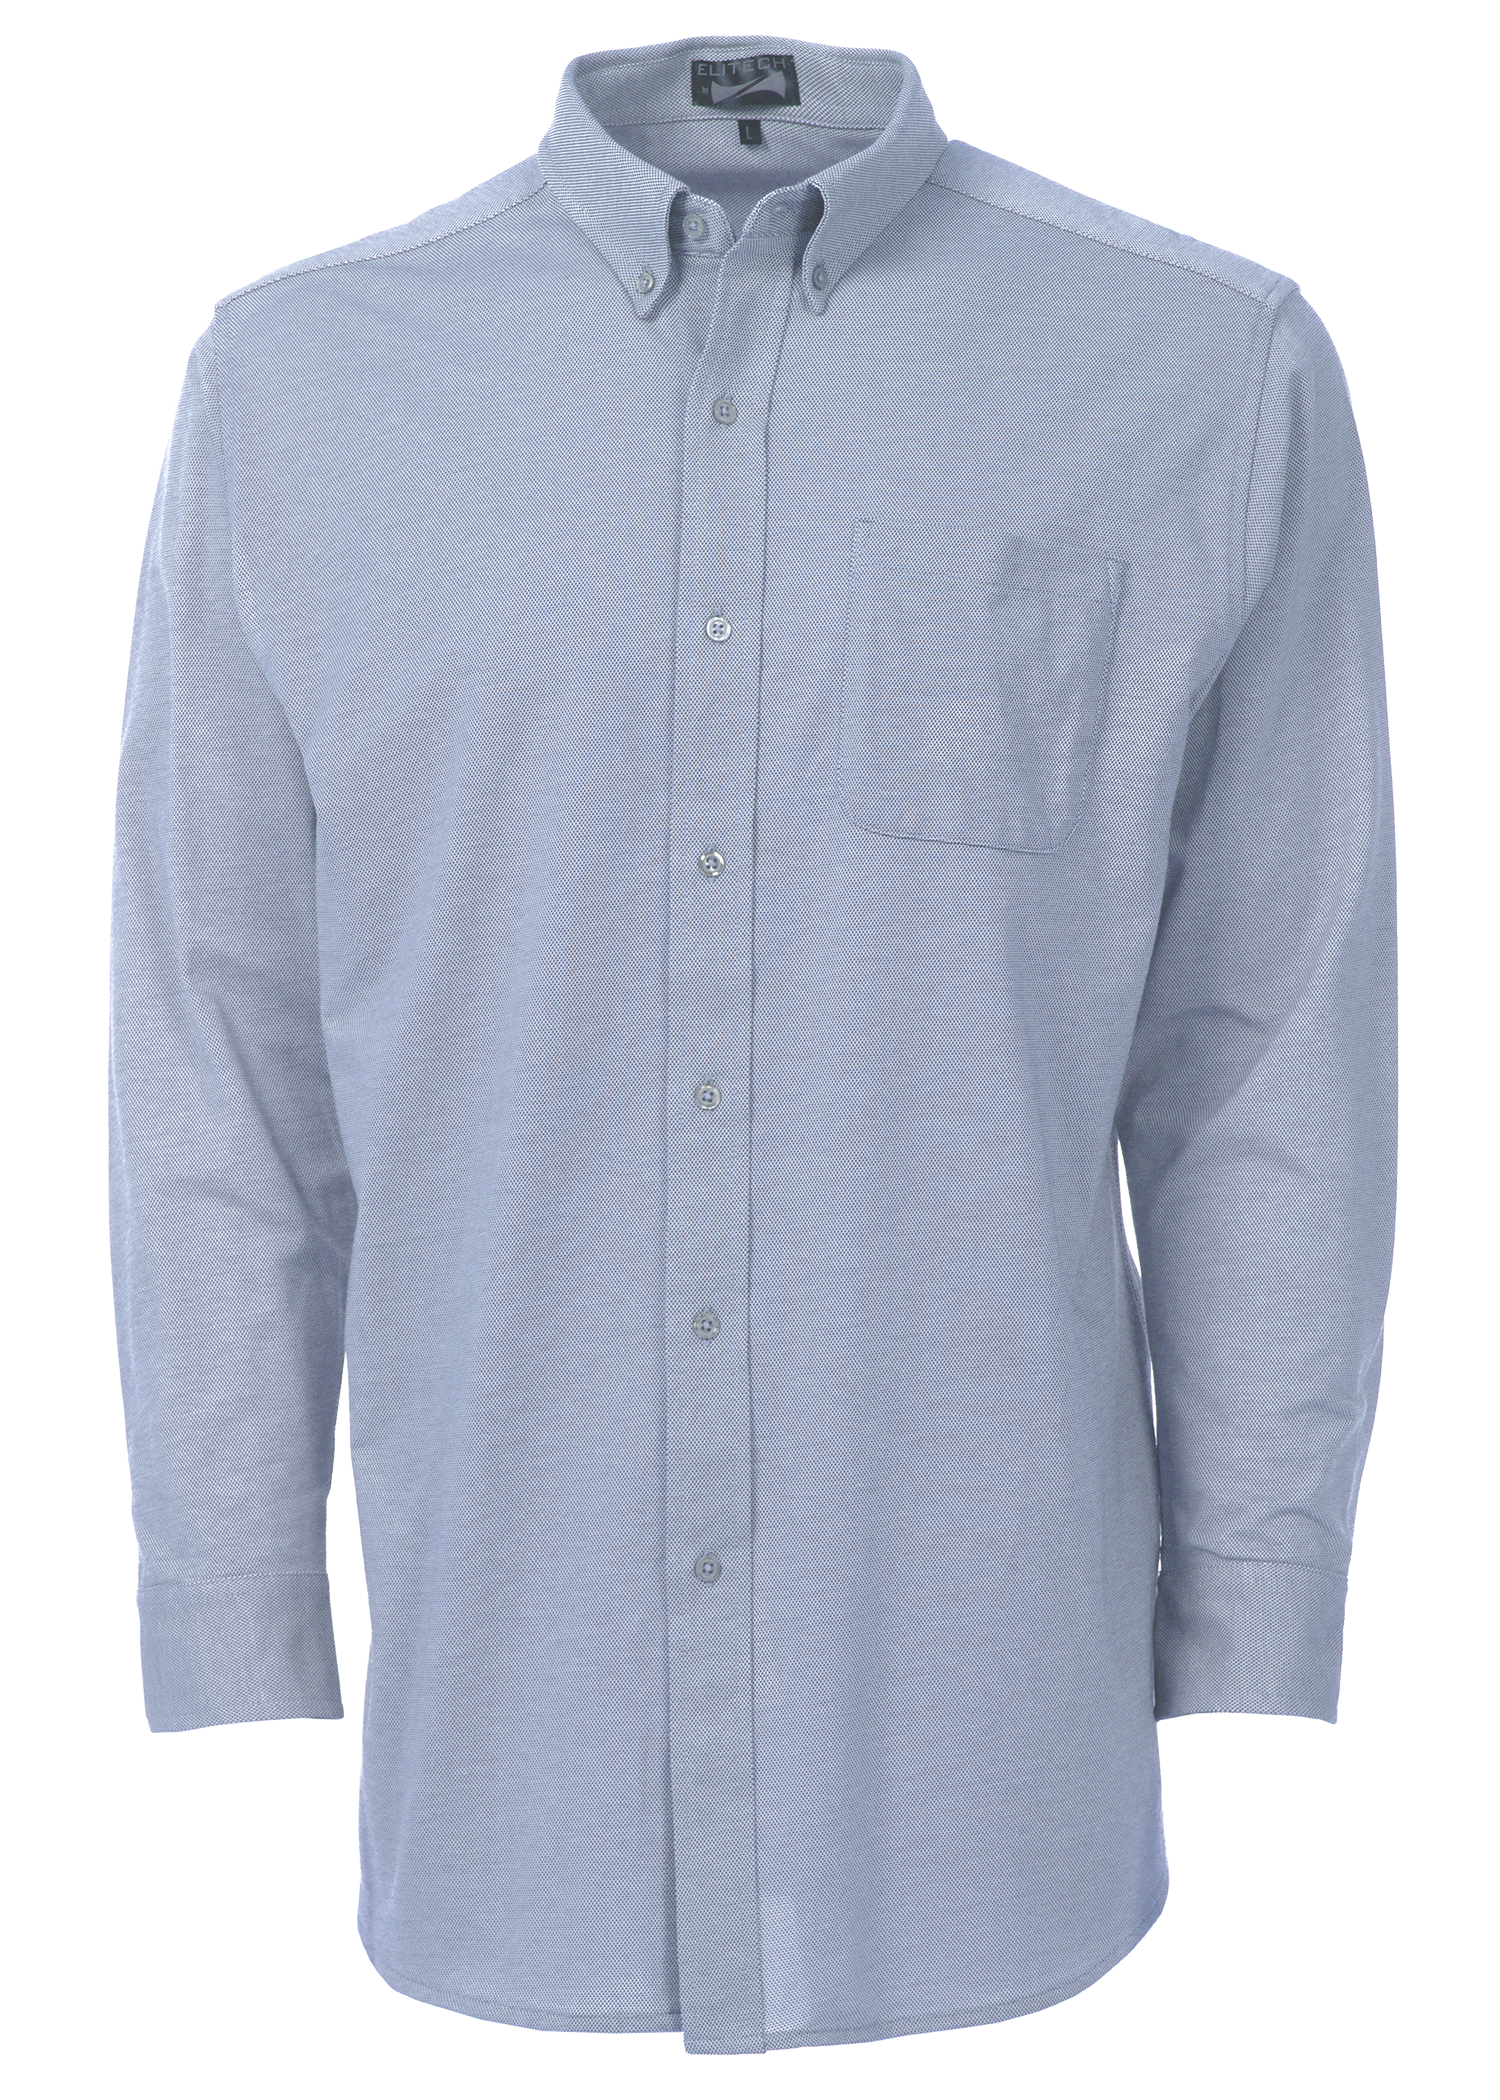 Zorrel Z4051 - Men's Long Sleeve Knit Shirt